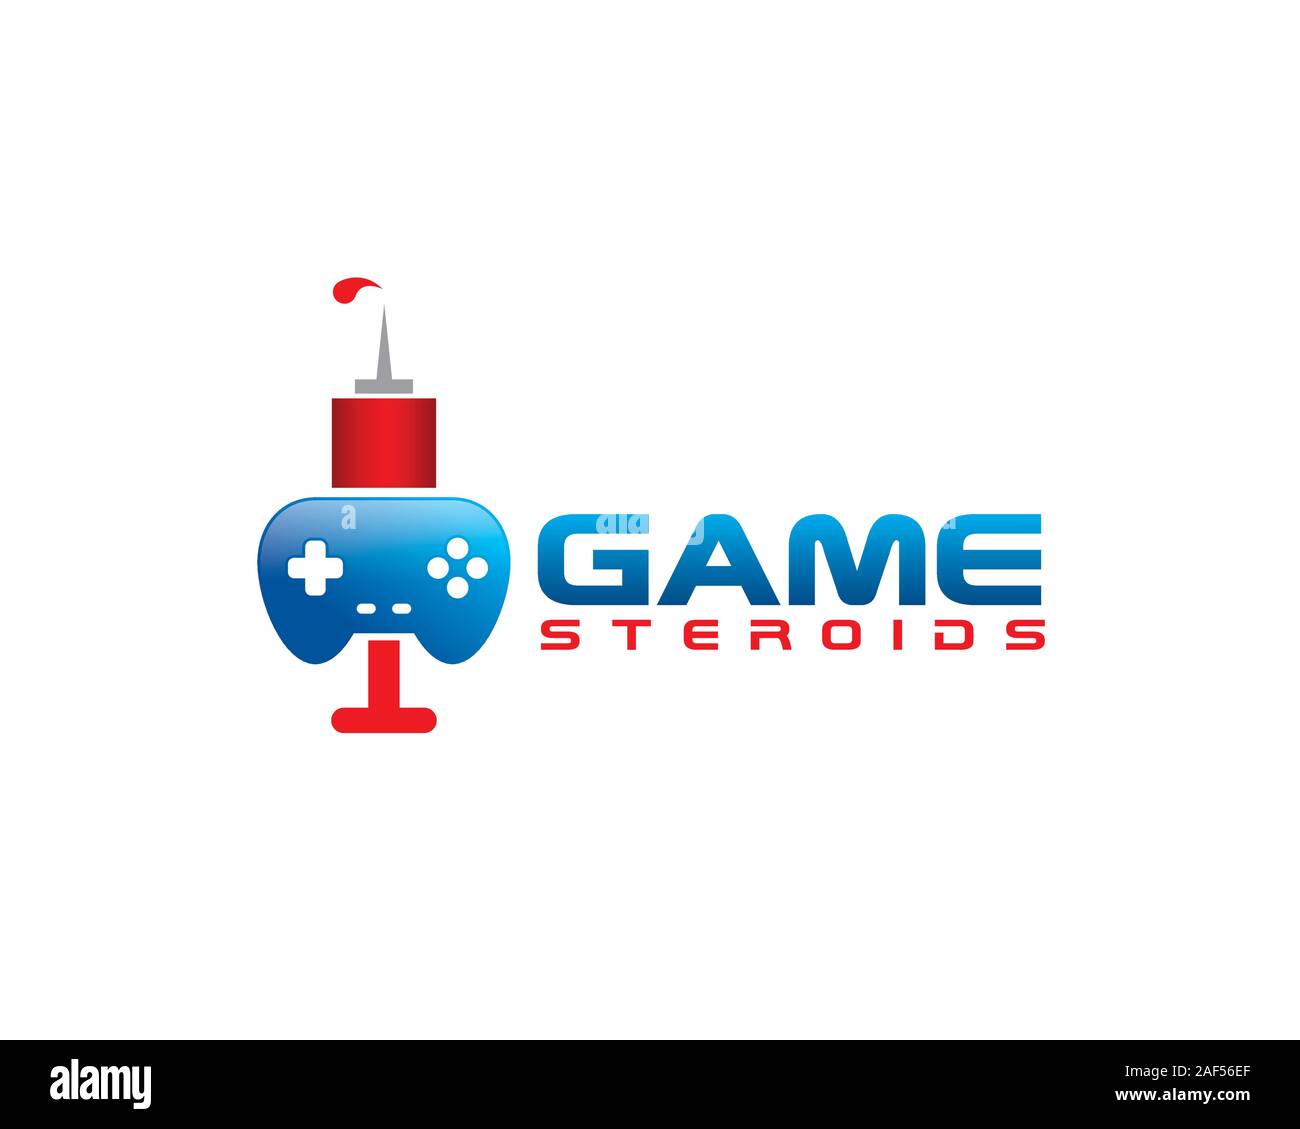 game steroids logo Stock Vector